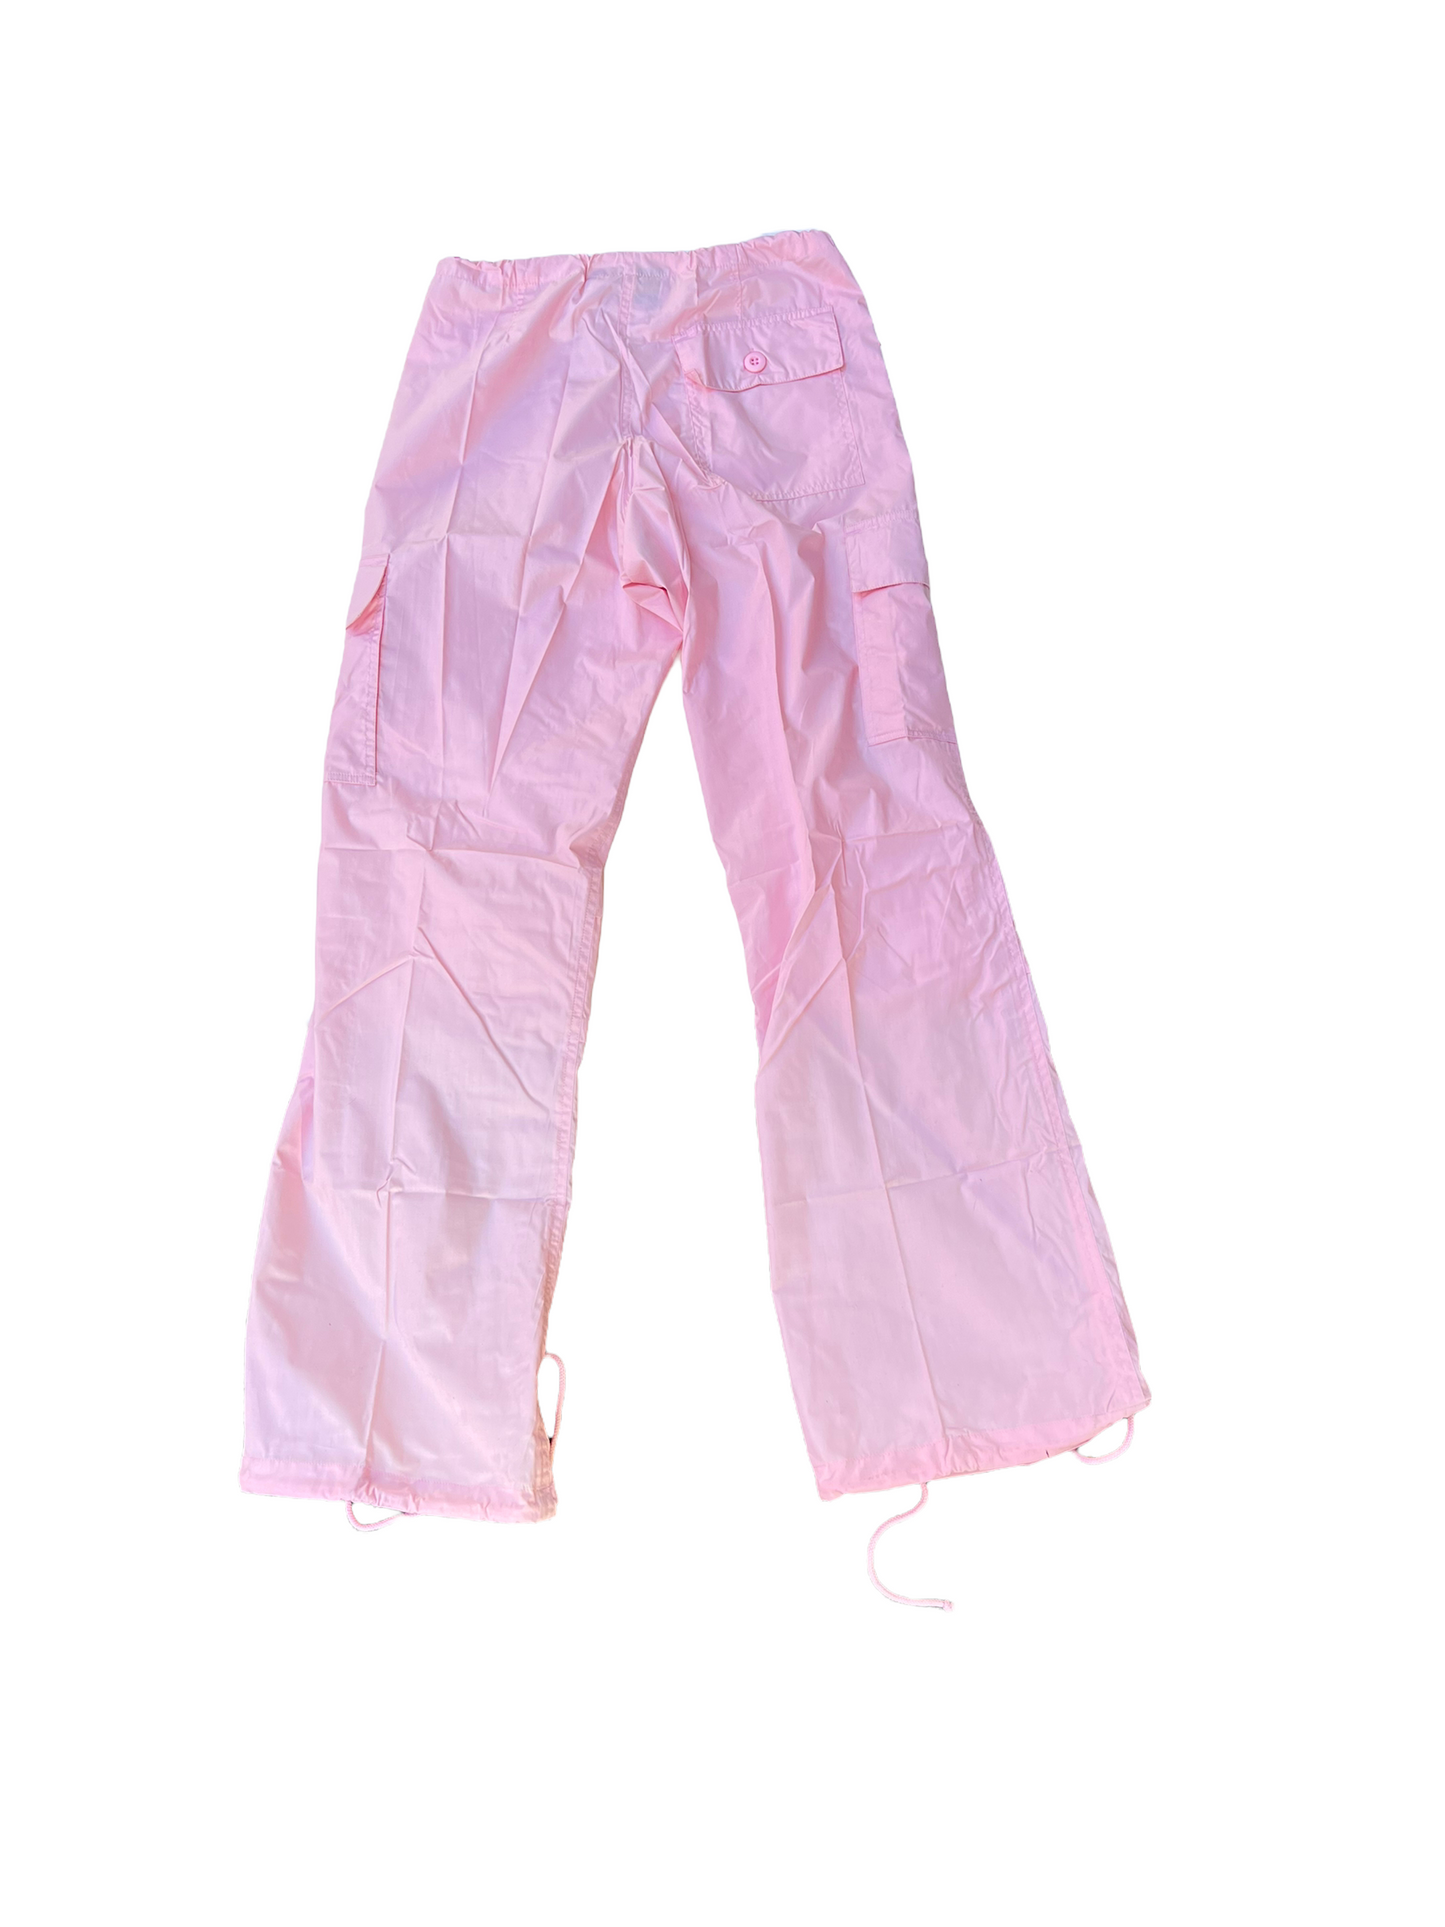 UFO Parachute Pants Baby Pink 83840